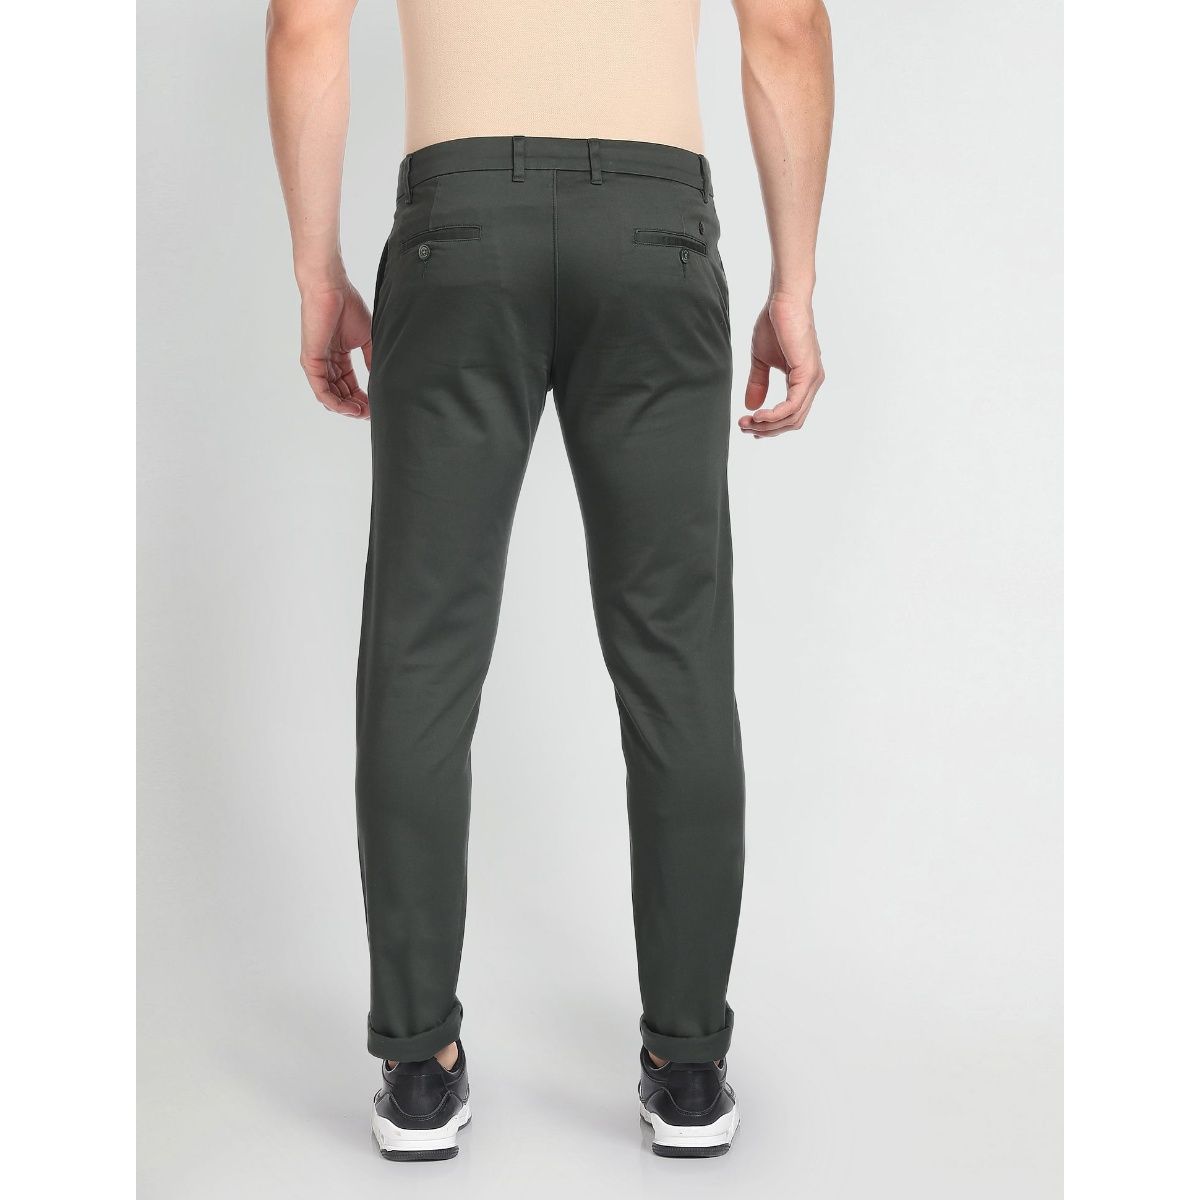 Buy Arrow Jackson Super Slim Fit Smart Flex Trousers - NNNOW.com